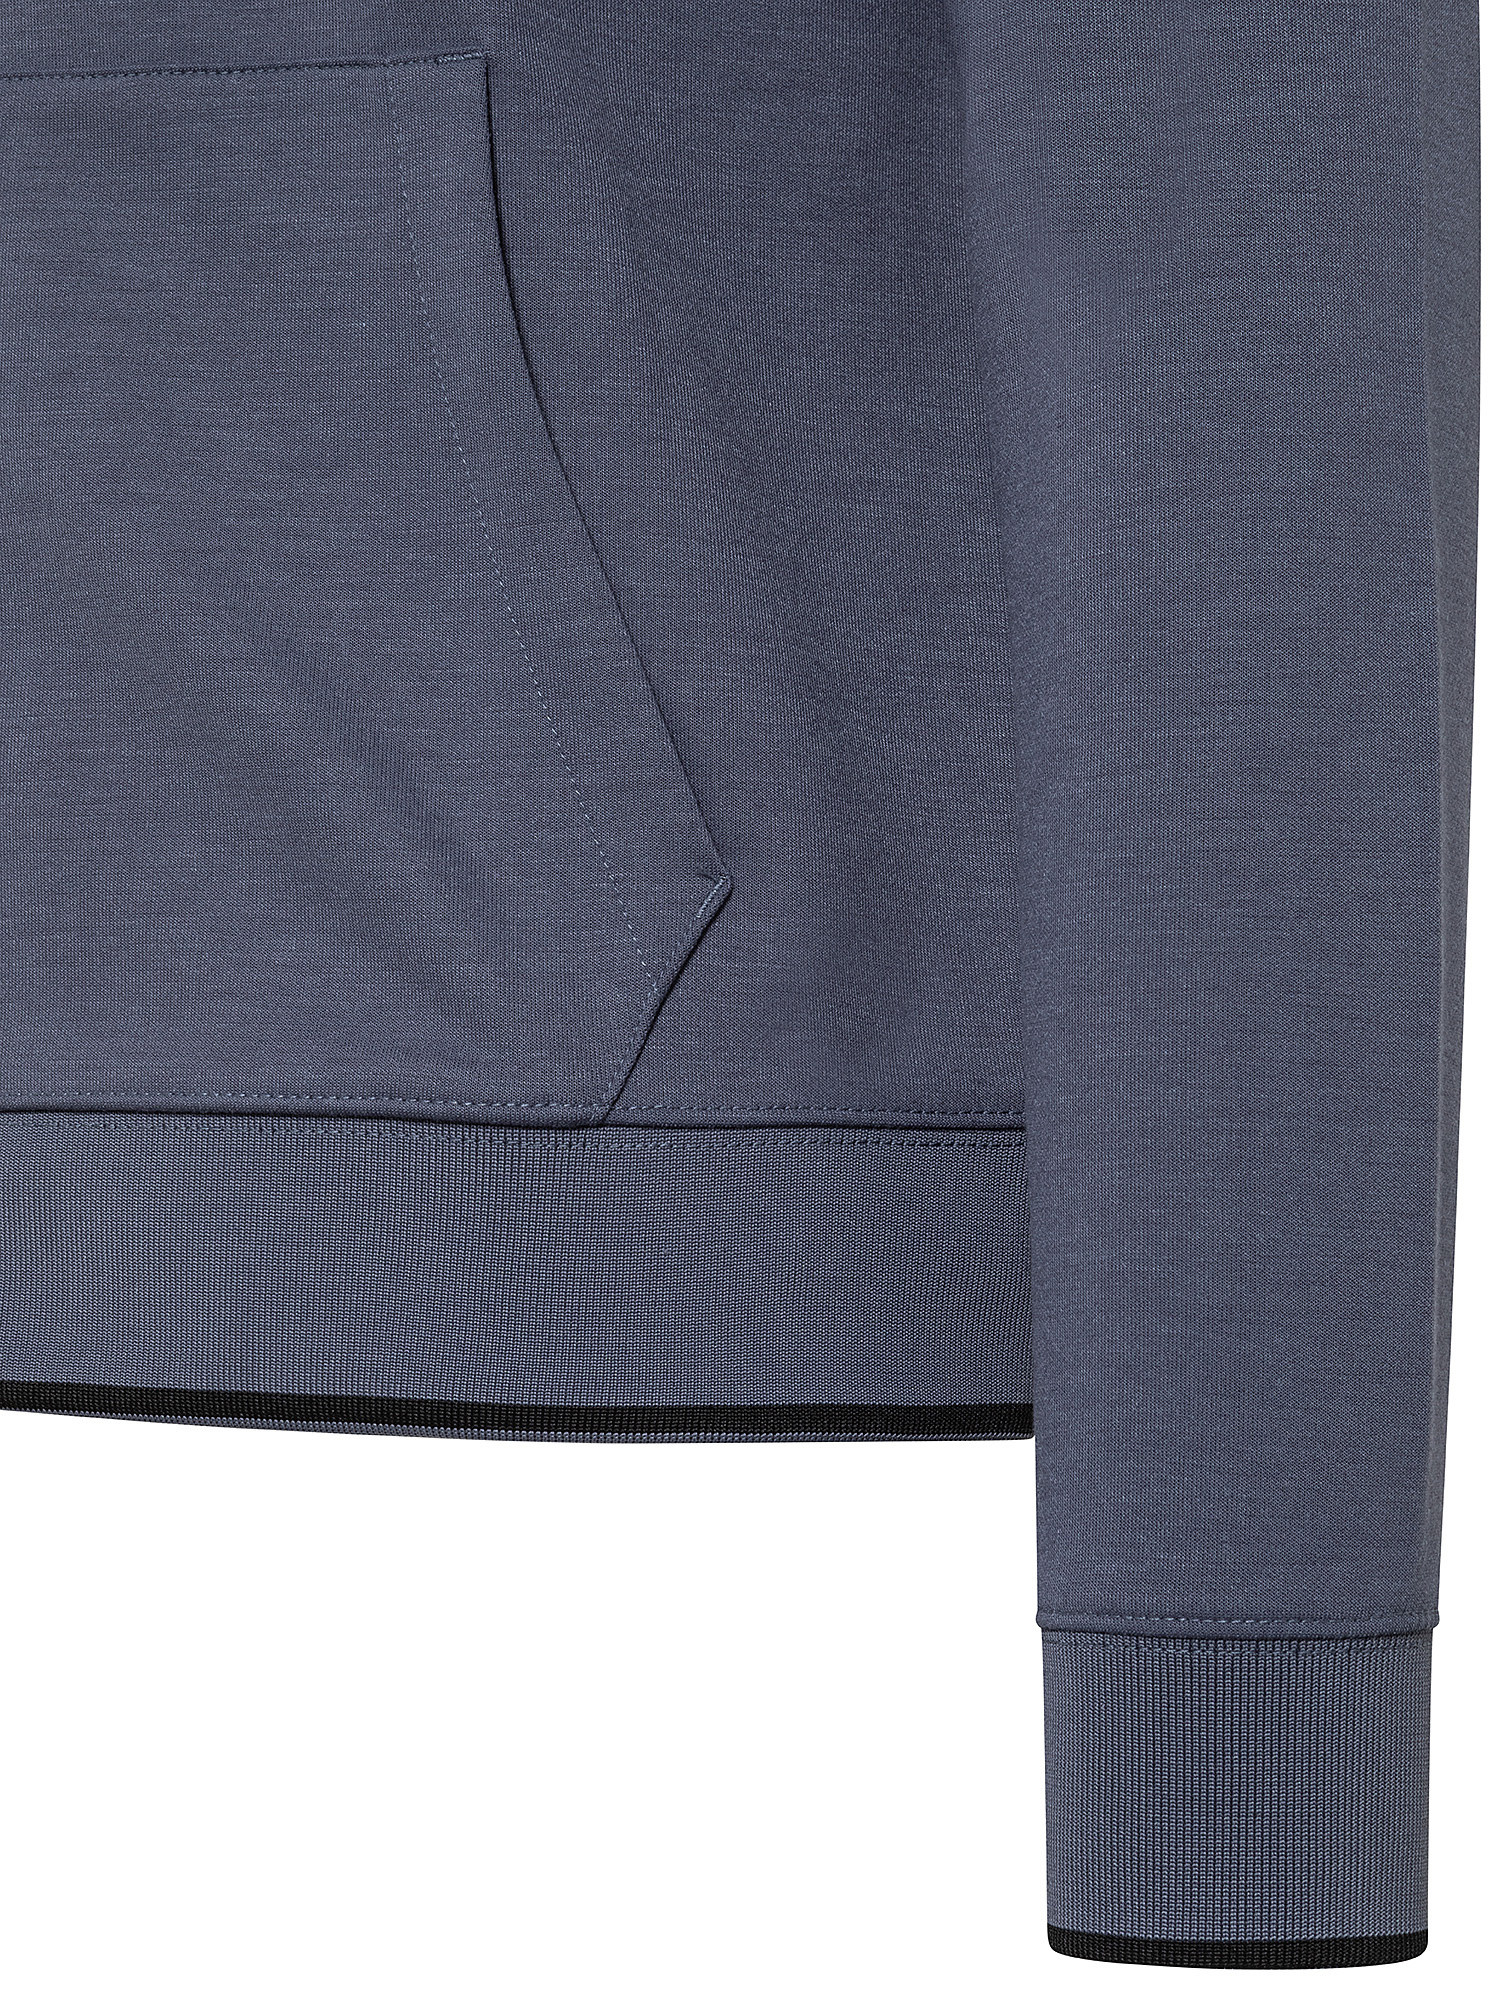 Sweatshirt, Dark Grey, large image number 2